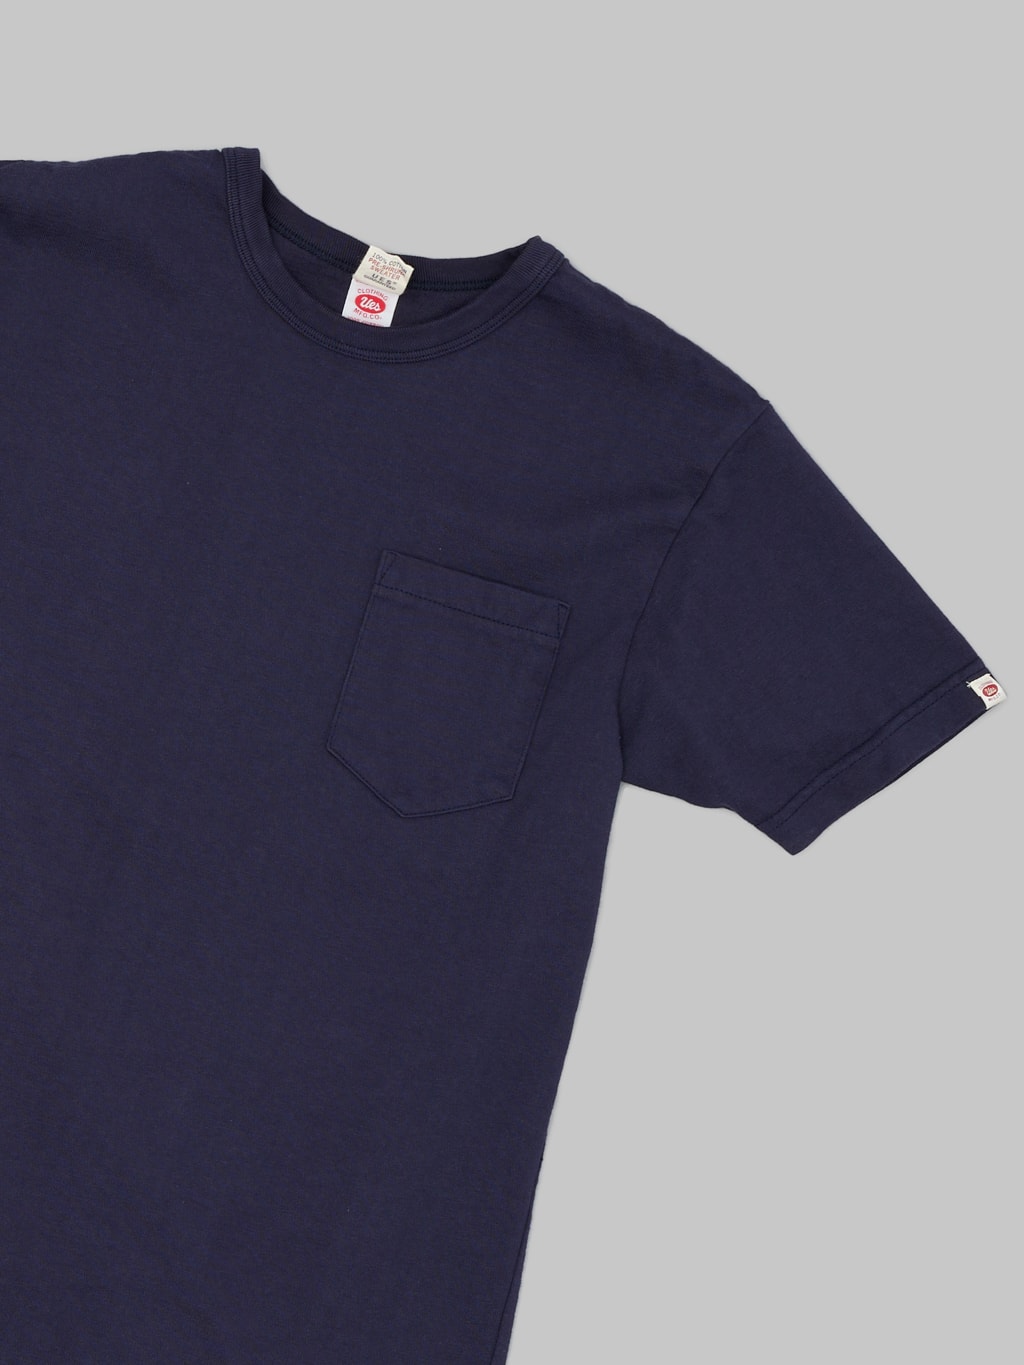 UES Ramayana Crew-Neck Pocket T-Shirt Navy